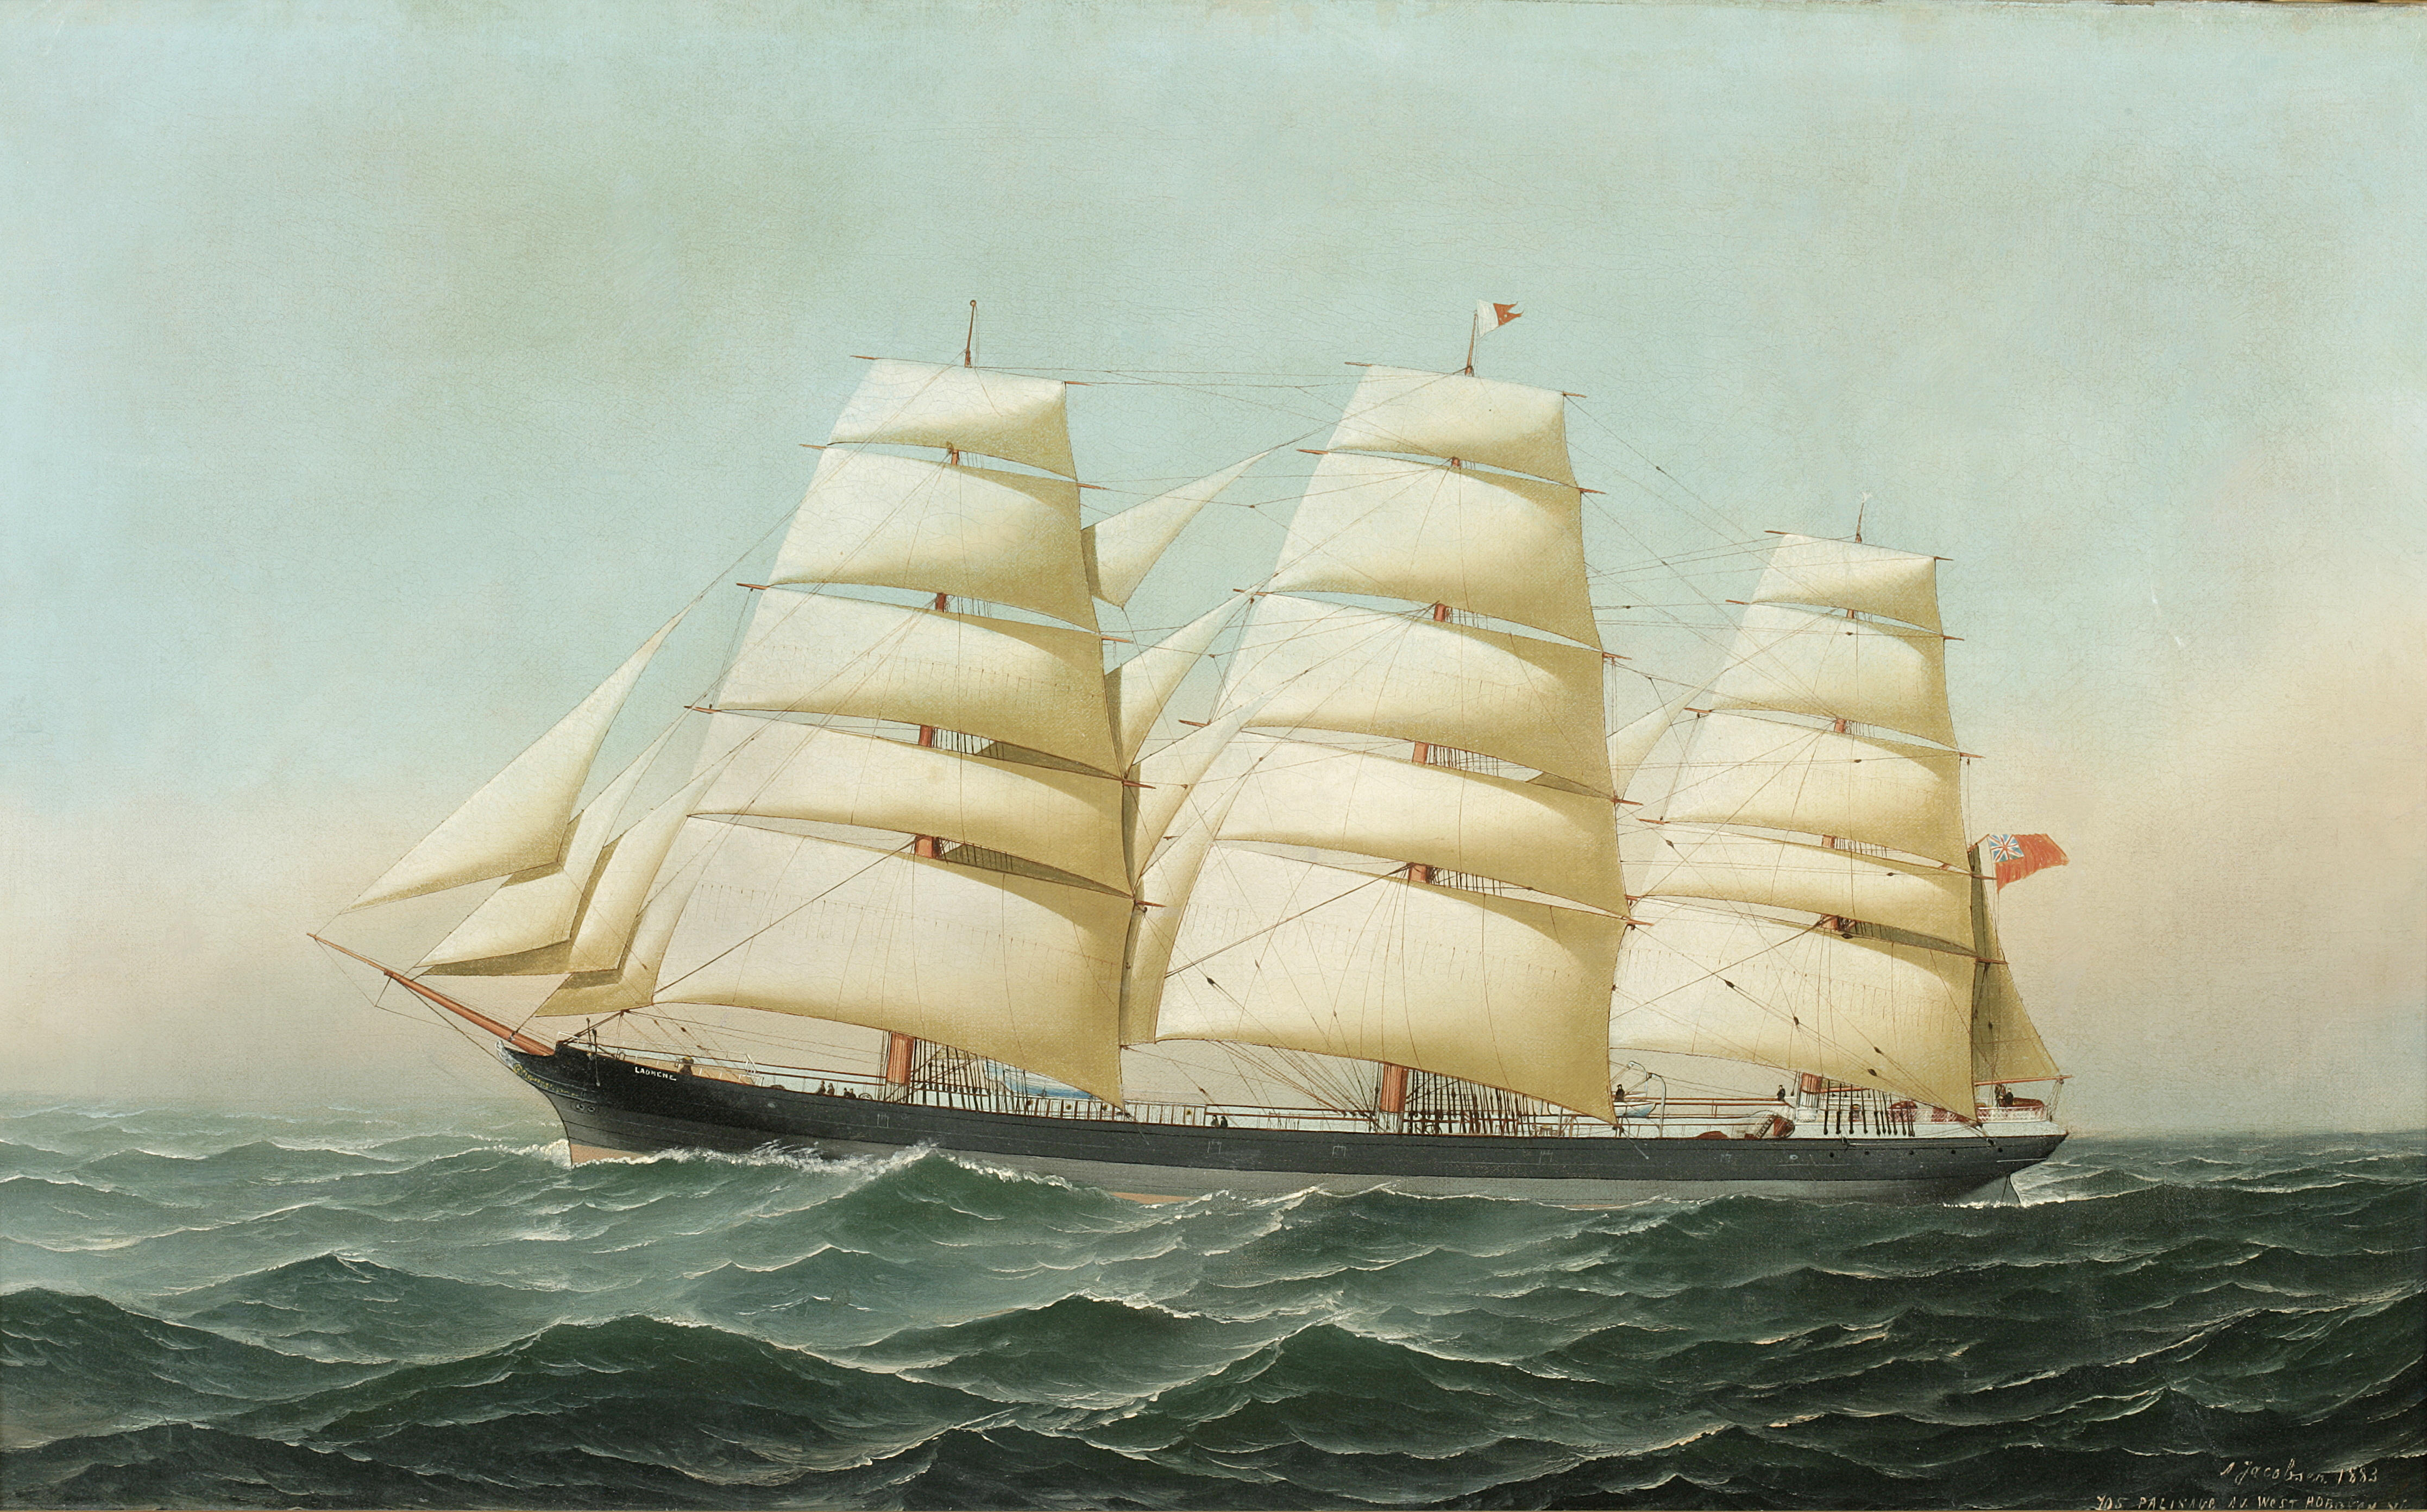 Antonio_Jacobsen_-_The_British_clipper_ship_Laomene_under_full_sail_at_sea.jpg